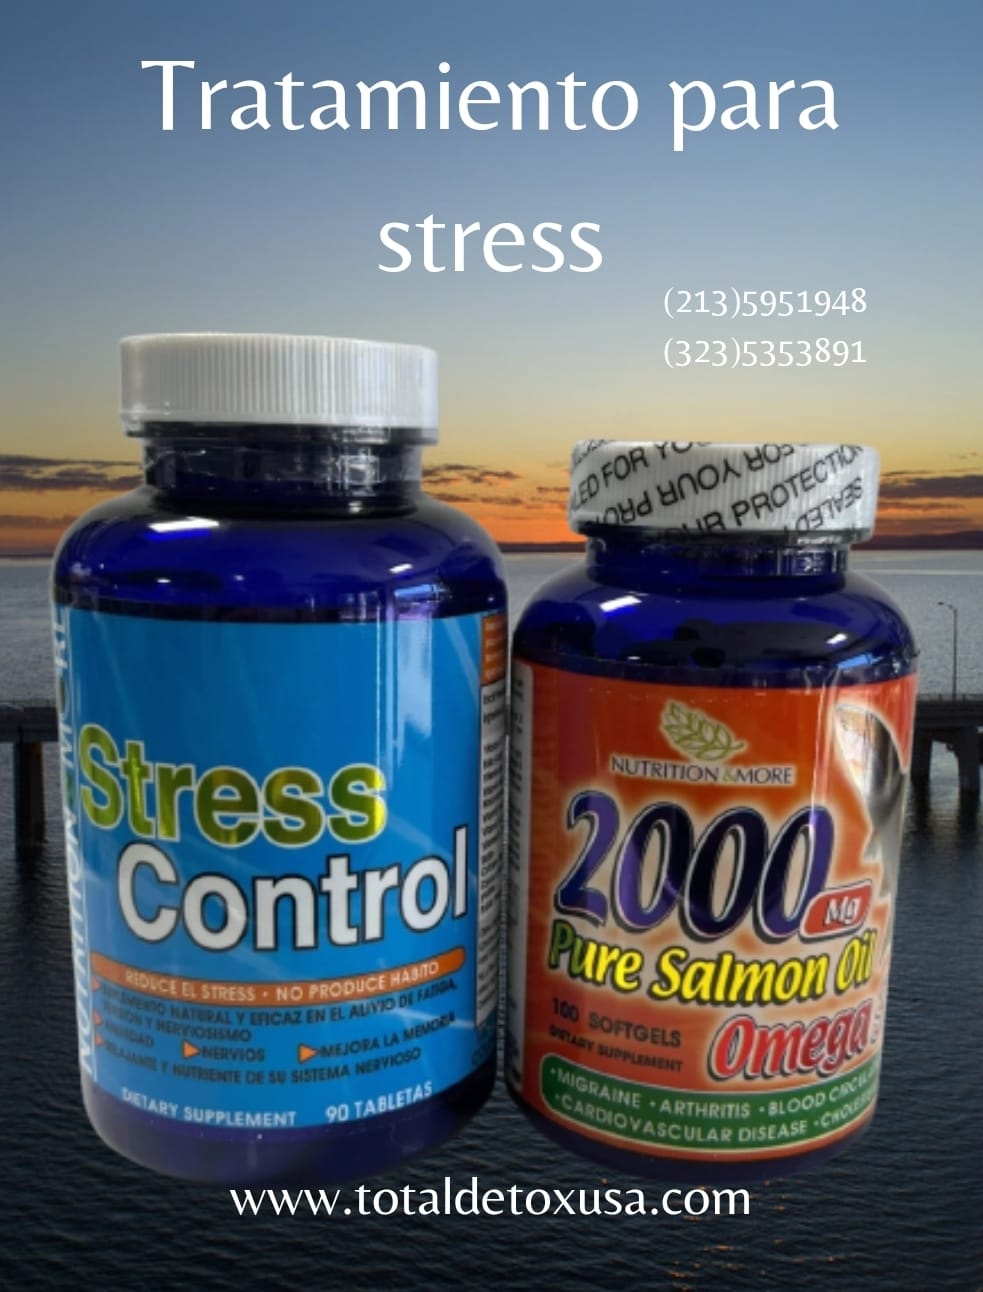 Tratamiento para stress